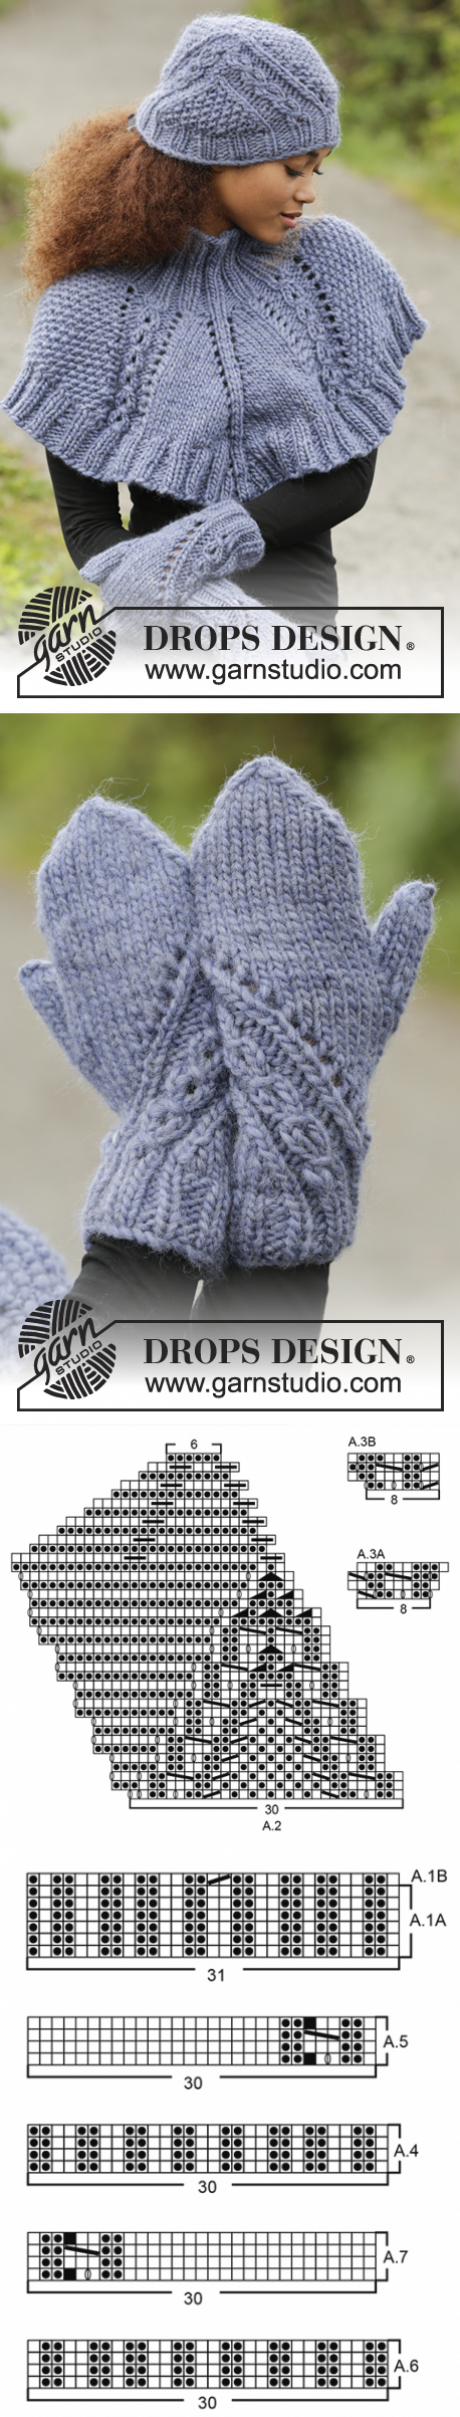 Drops Knitting Patterns Drops Design